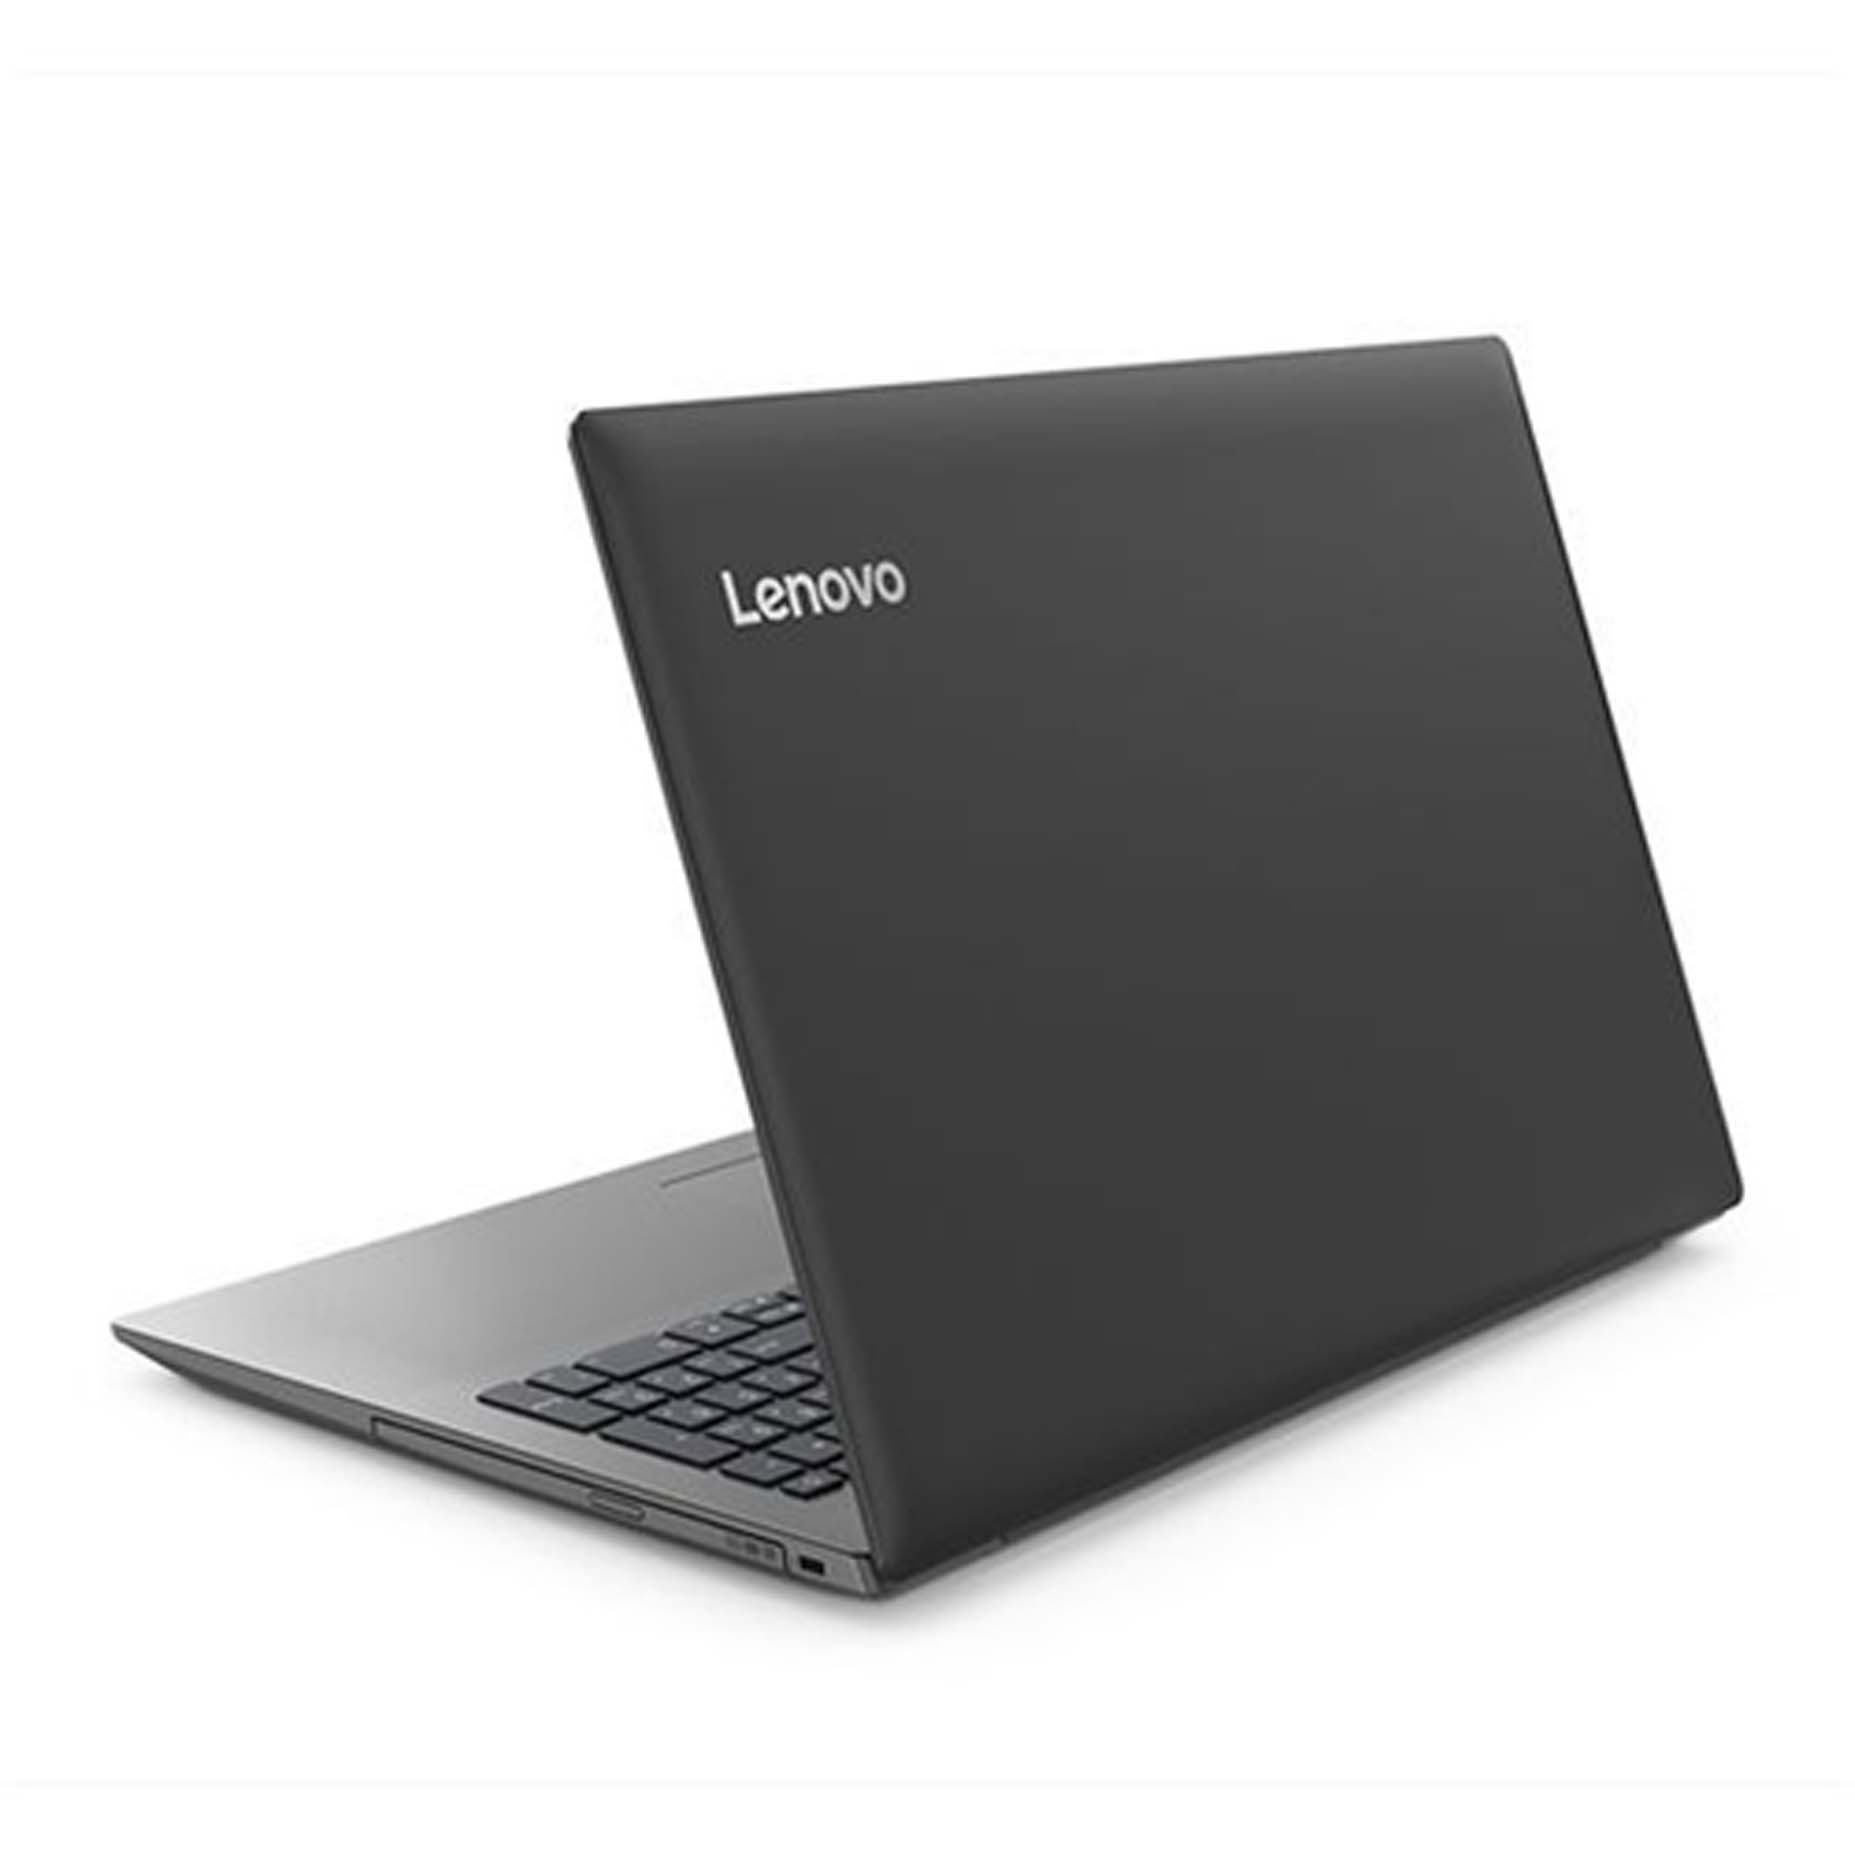 Harga Lenovo Ideapad IP330-14IKBR 72ID Laptop Intel Core i7-8550U 8GB 1TB AMD Radeon 530 2GB Windows 10 14Inch Onyx Black